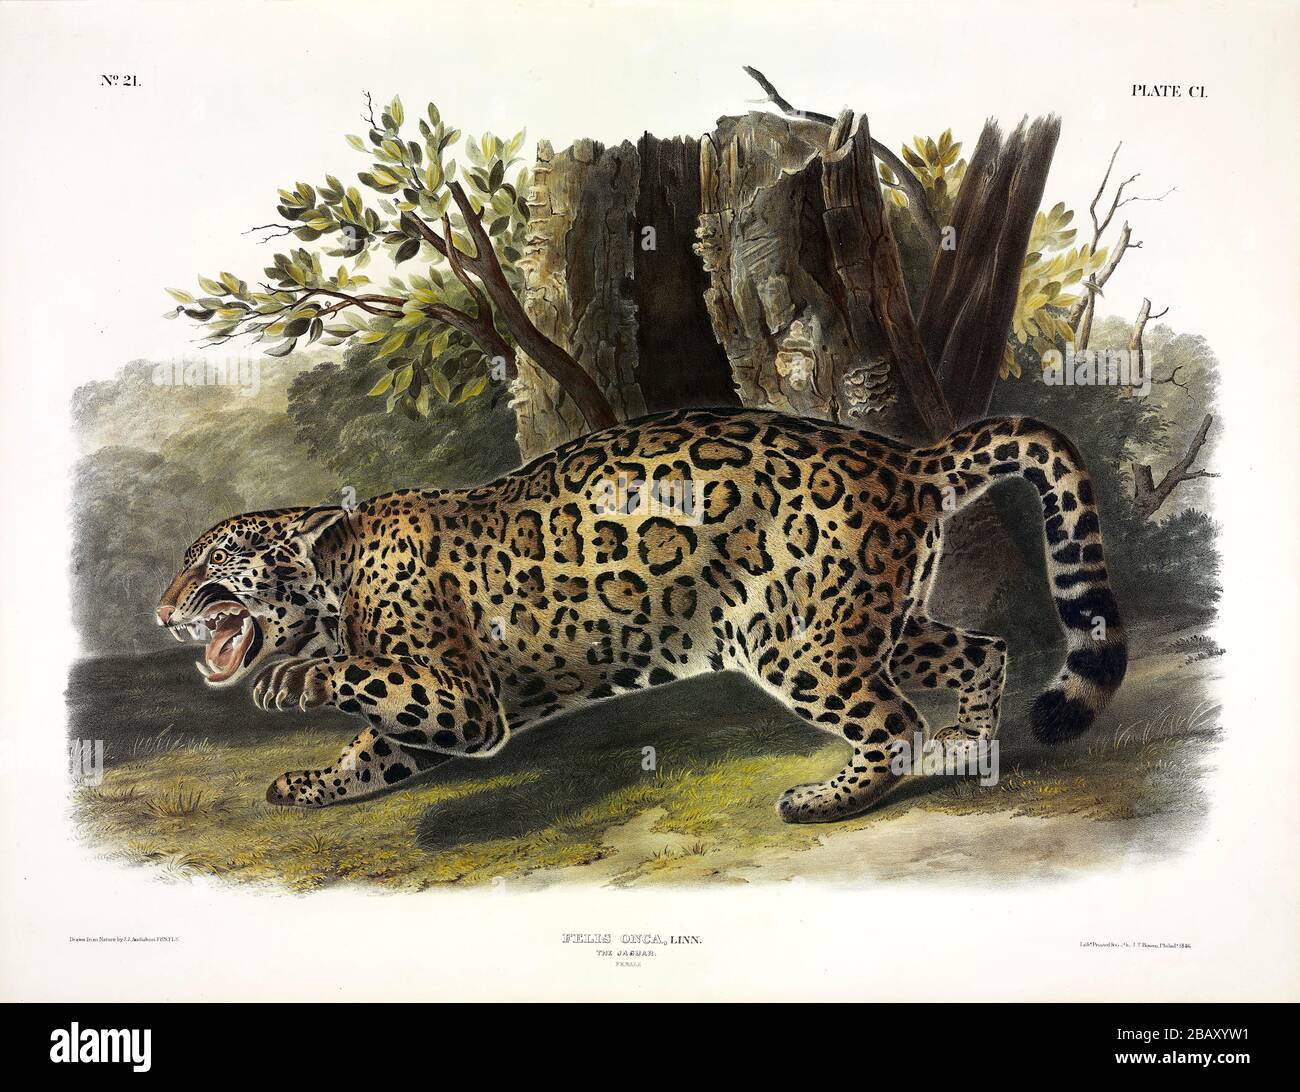 Plate 101 Jaguar (Felis Onca) from The Viviparous Quadrupeds of North America, John James Audubon, Very high resolution and quality edited image Stock Photo